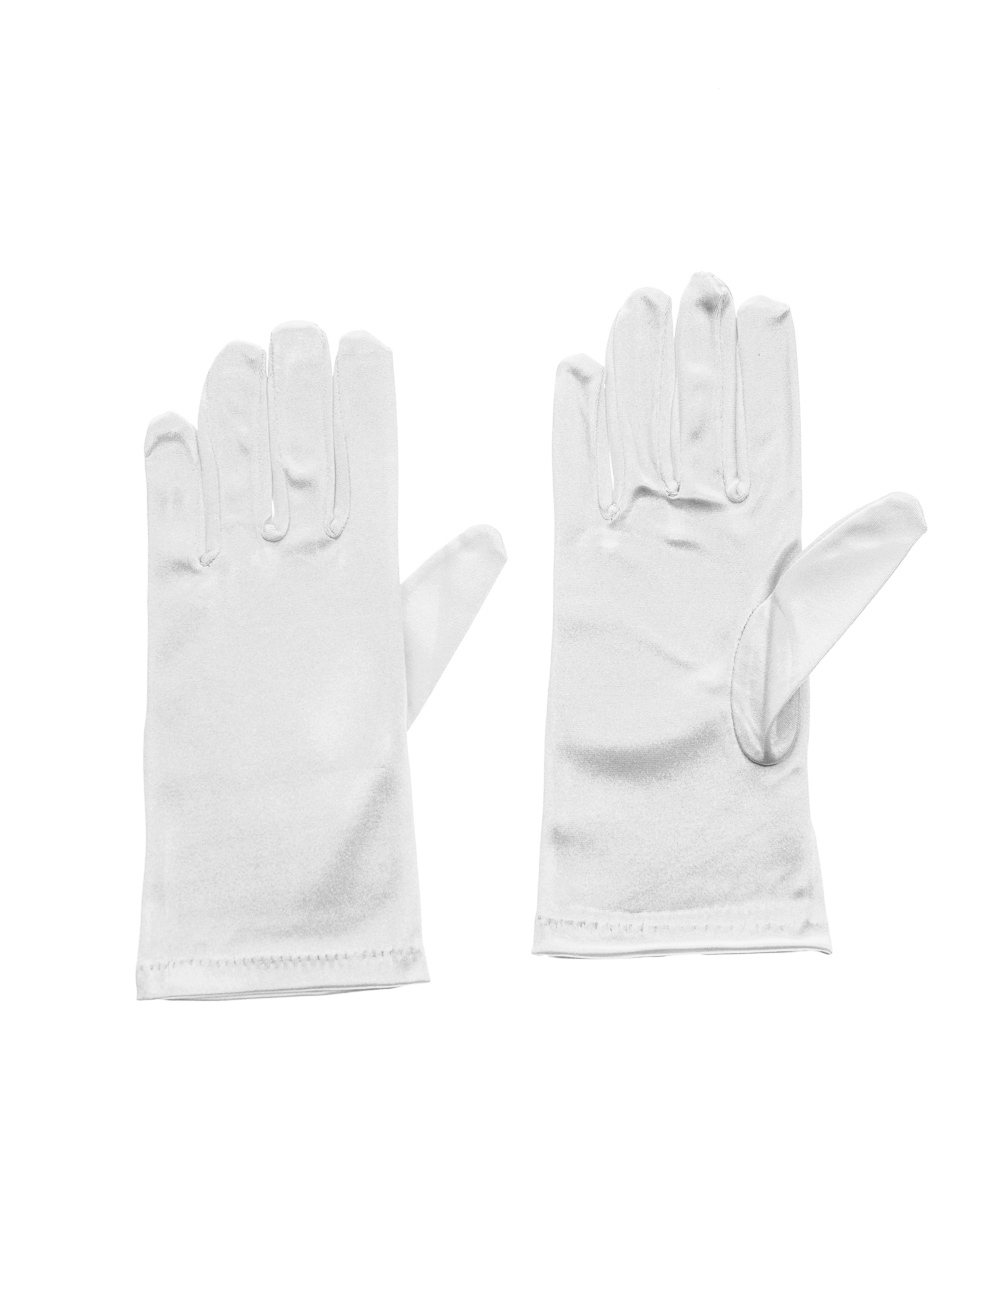 Handschuhe kurz Satin 20cm weiß one size